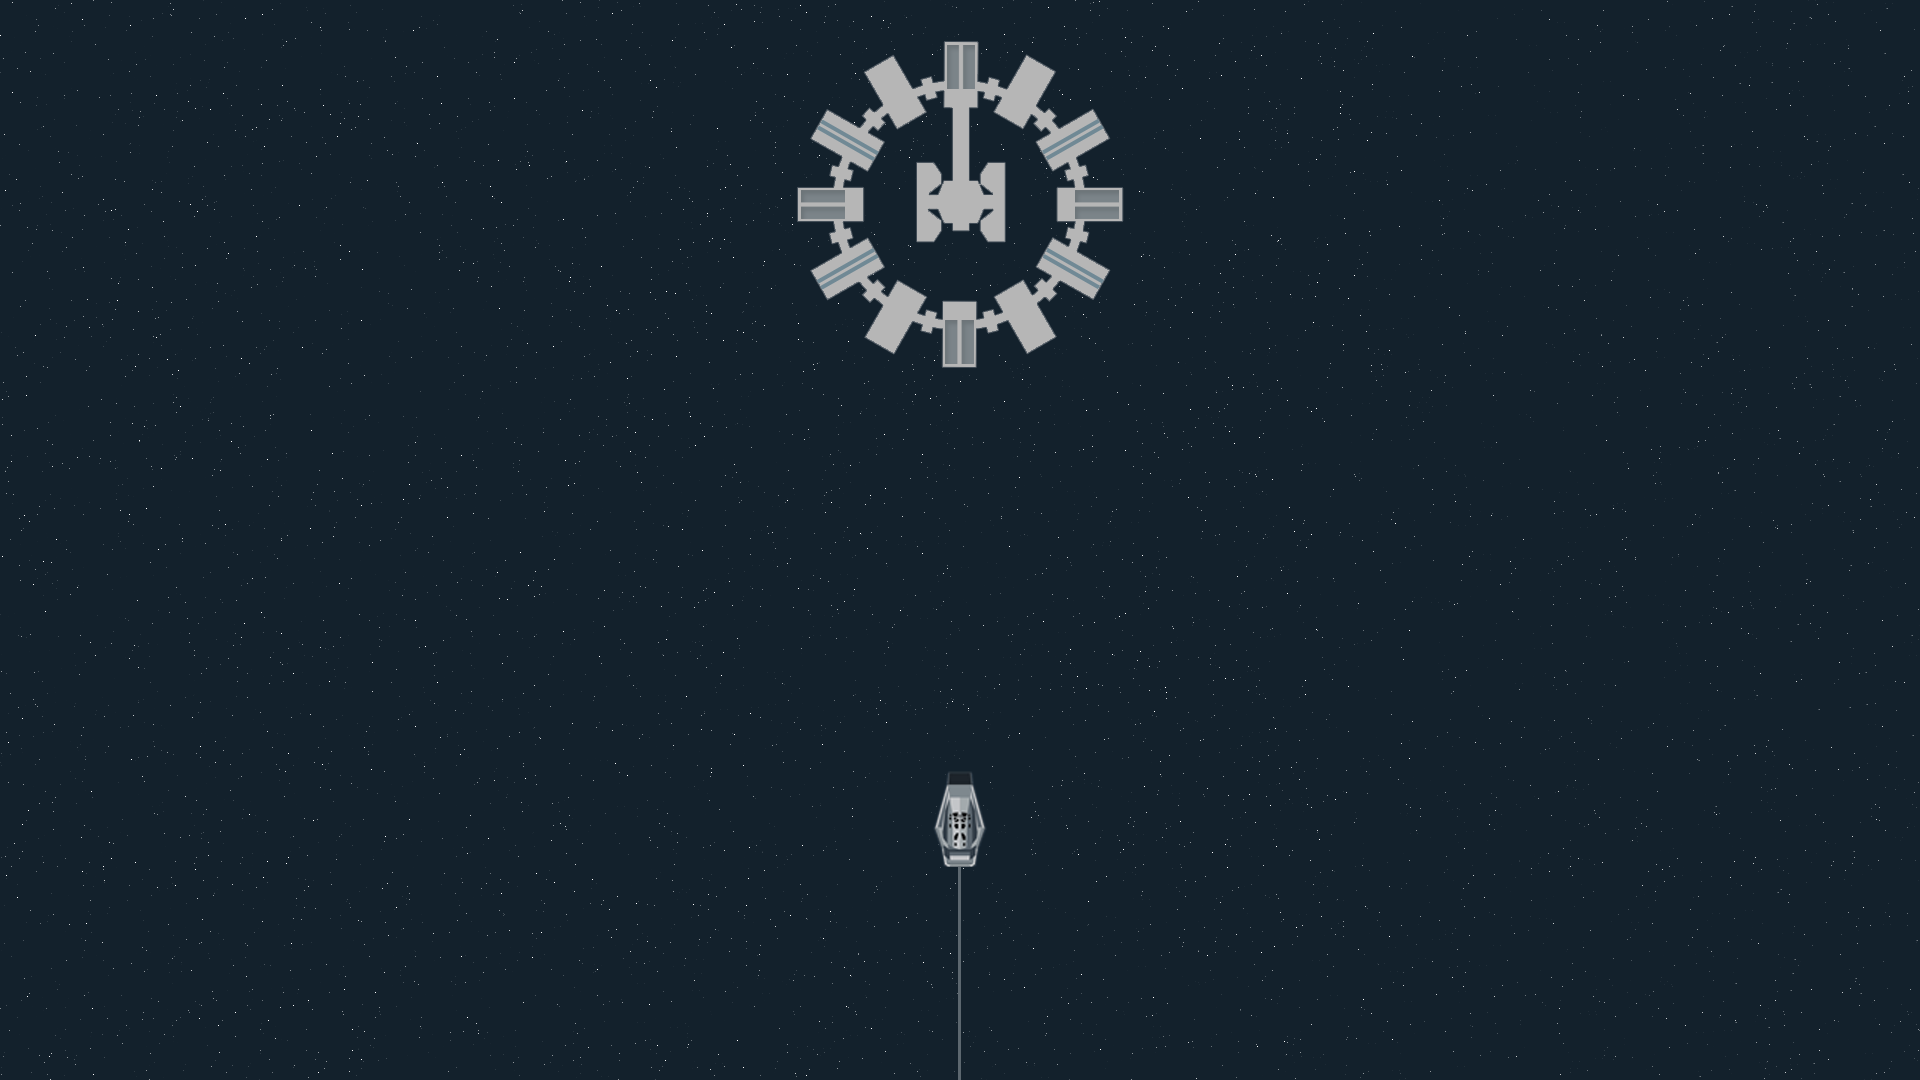 Interstellar Phone Wallpaper, Interstellar Photos for Desktop | 45